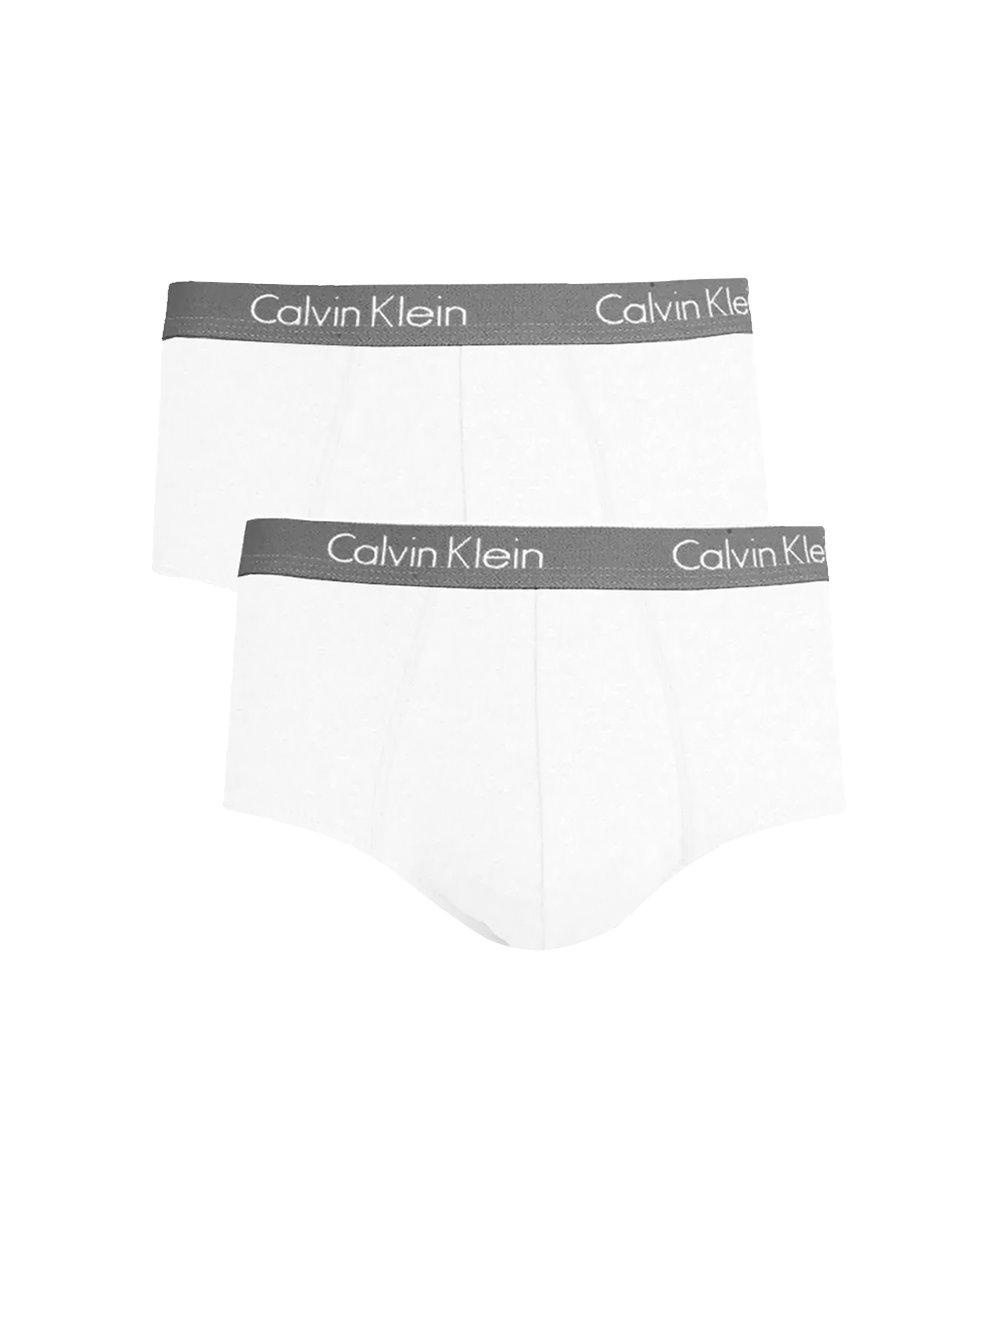 Cuecas Calvin Klein Brief Cotton Print Branca Pack 2UN